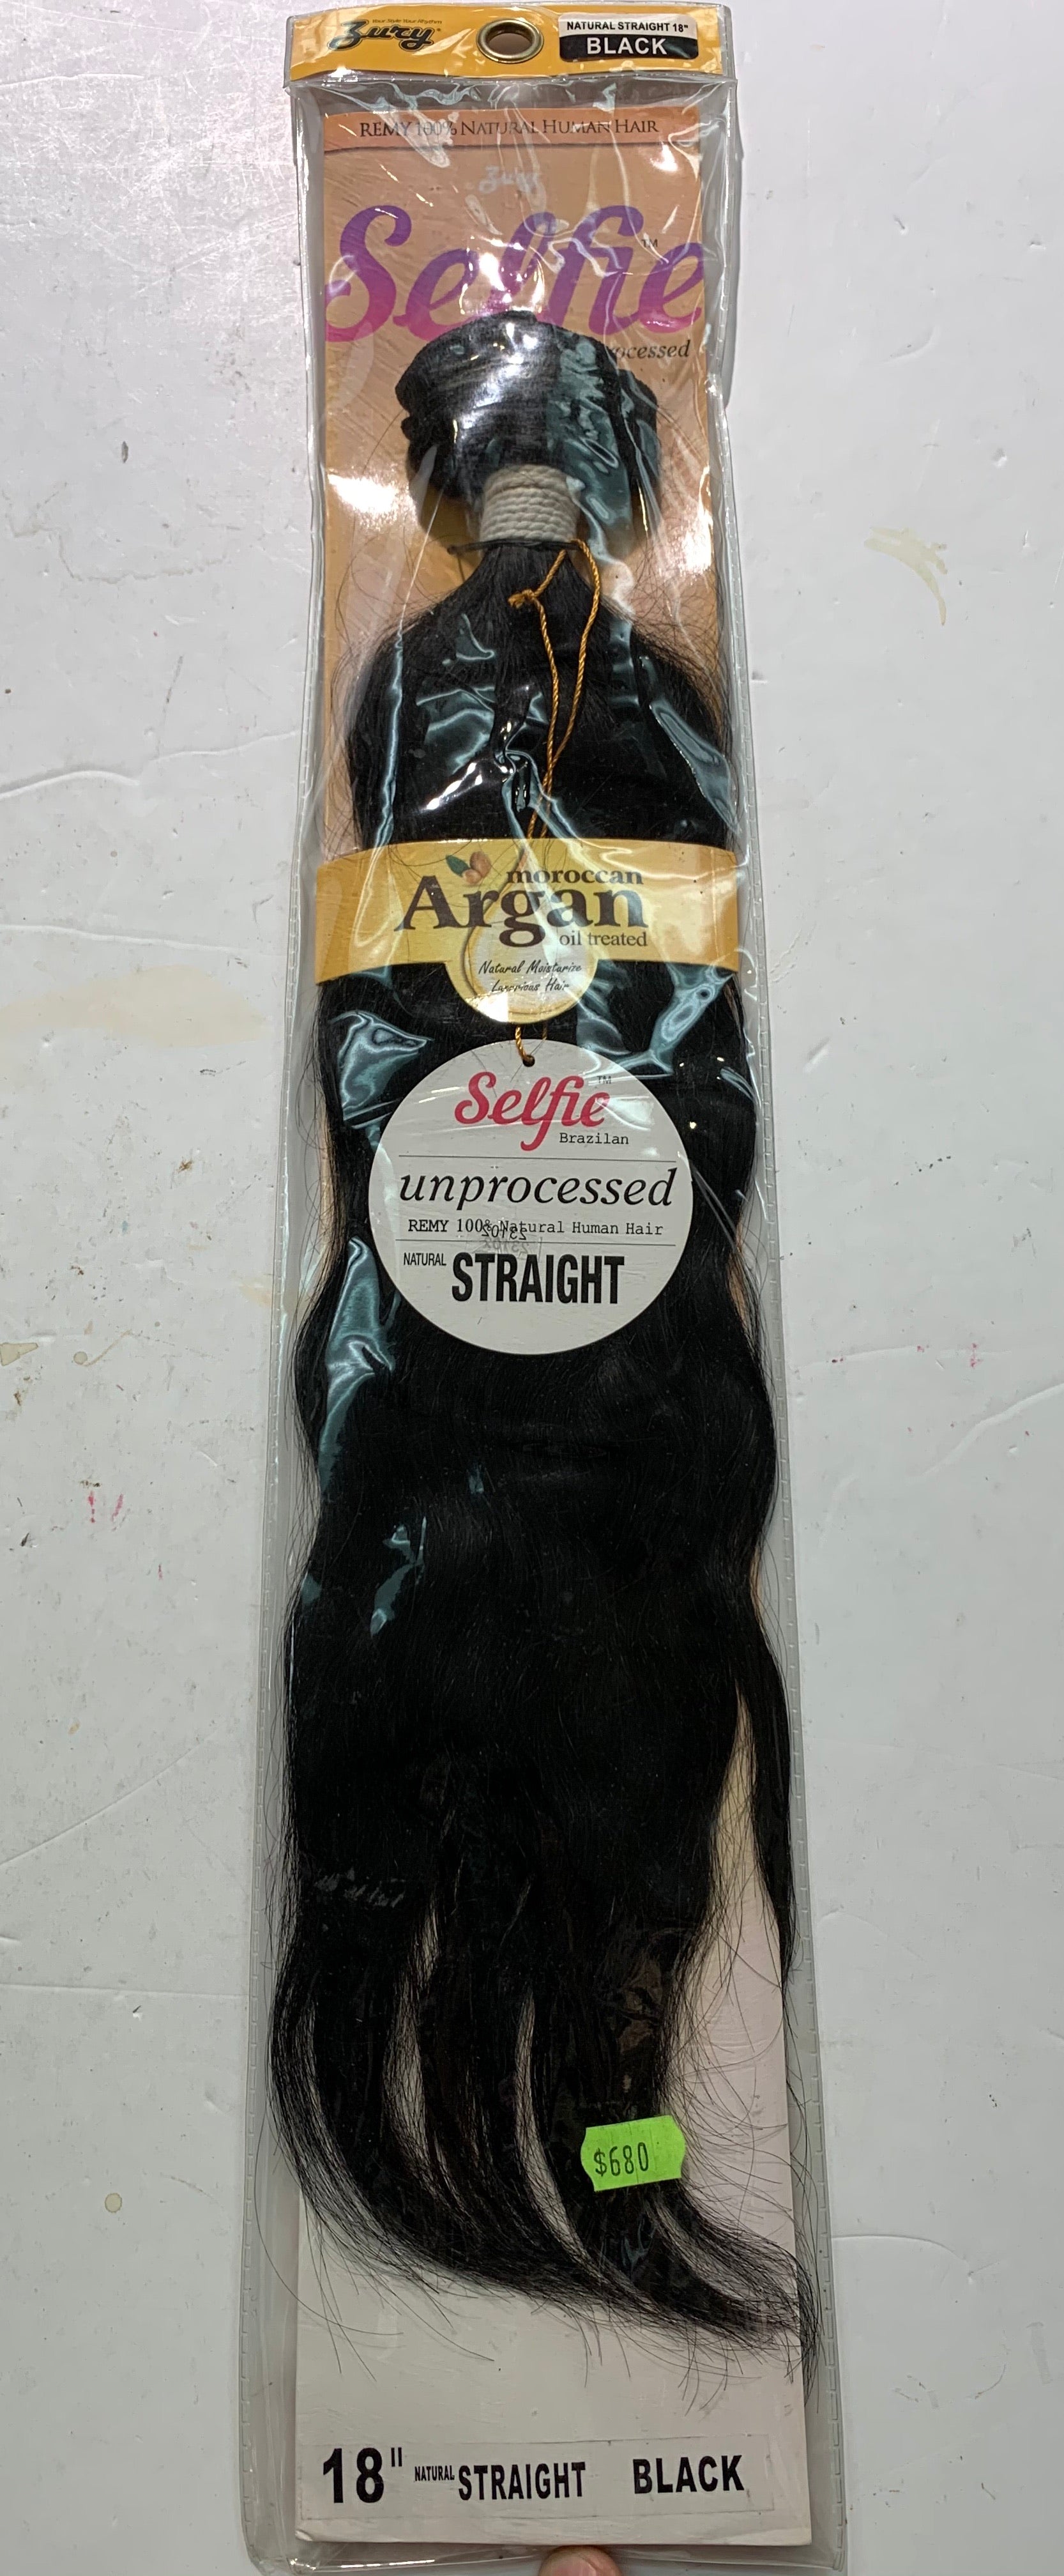 Zuri selfie 100% unprocessed remyargan oil treated 16/18/24”